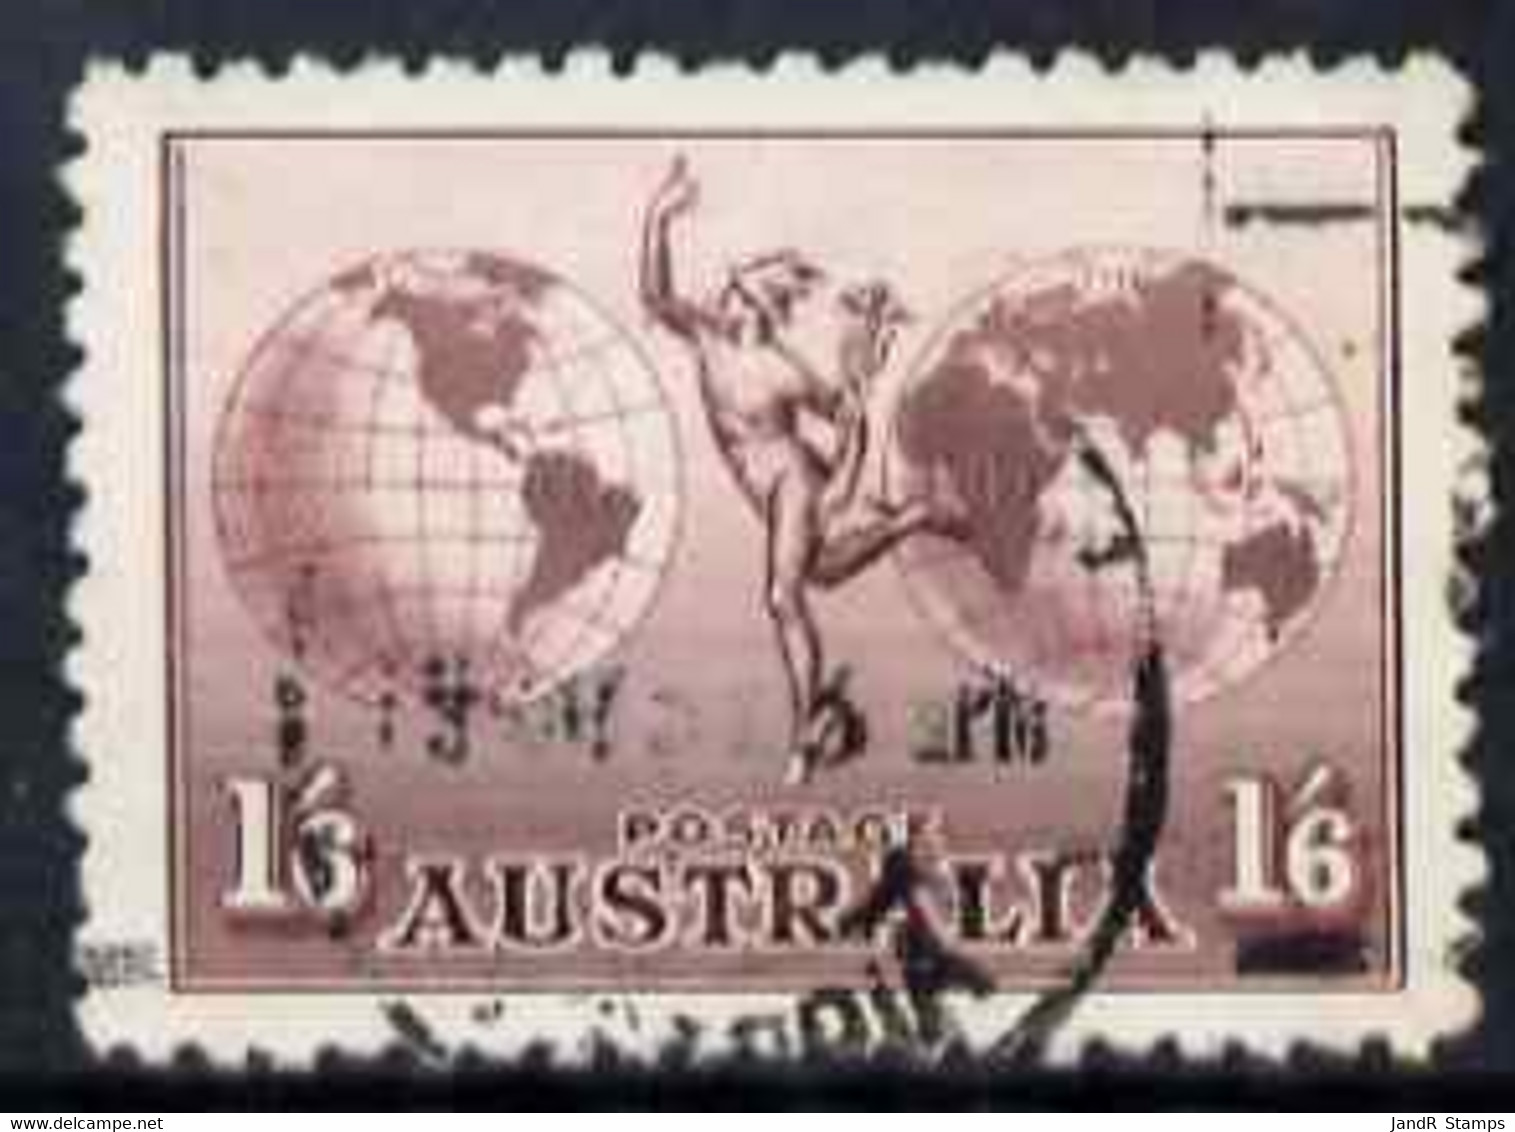 Australia 1934 Hermes 1s6d No Wmk Fine Cds Used With Plate Scratch Top Left, SG 153var - Neufs